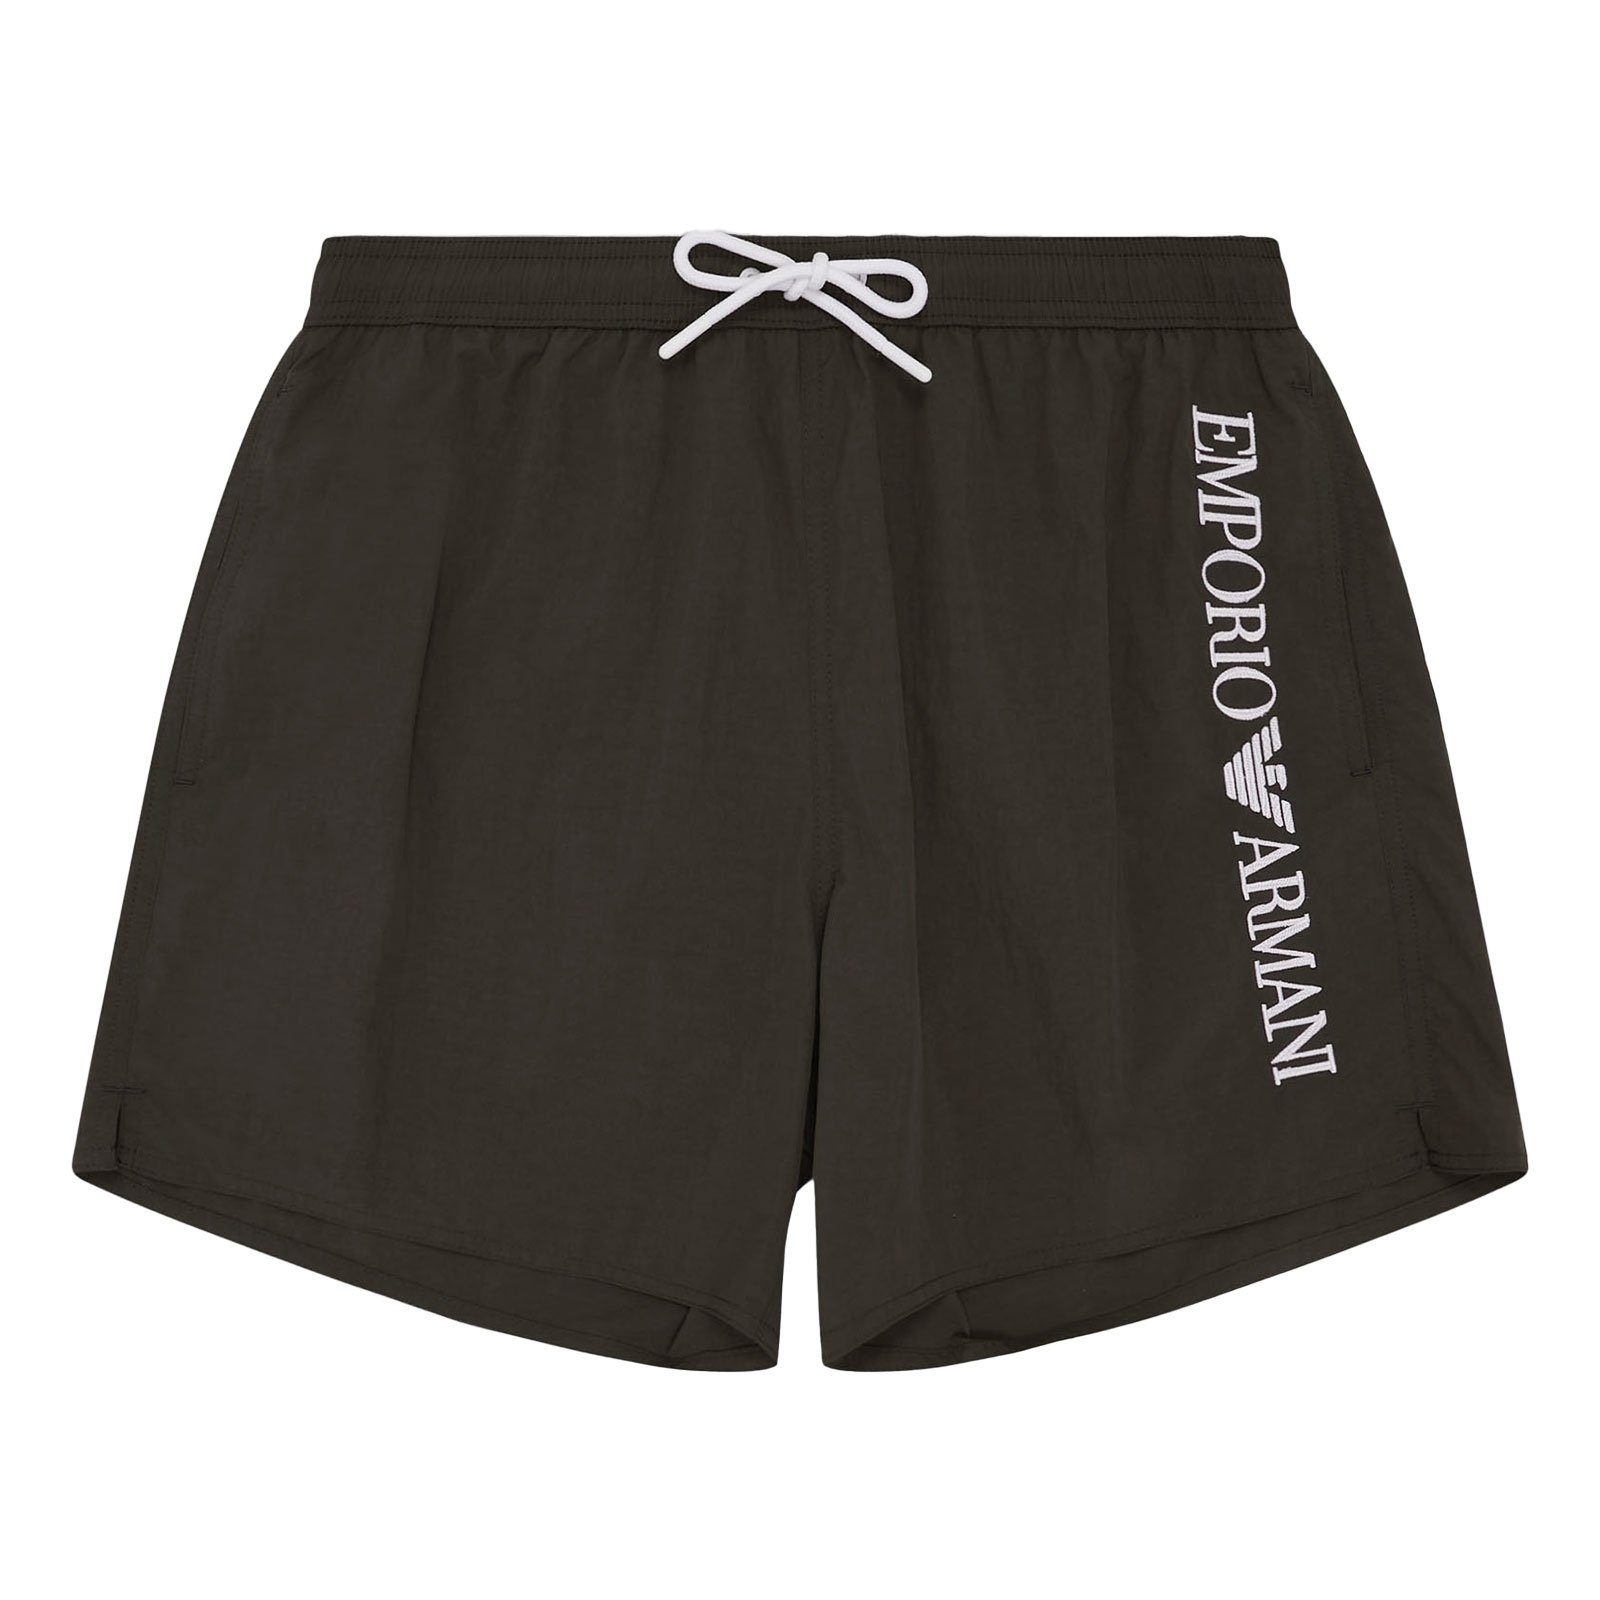 Emporio Armani Boxer-Badehose Mid Boxer Beachwear mit vertikalem Markenschriftzug